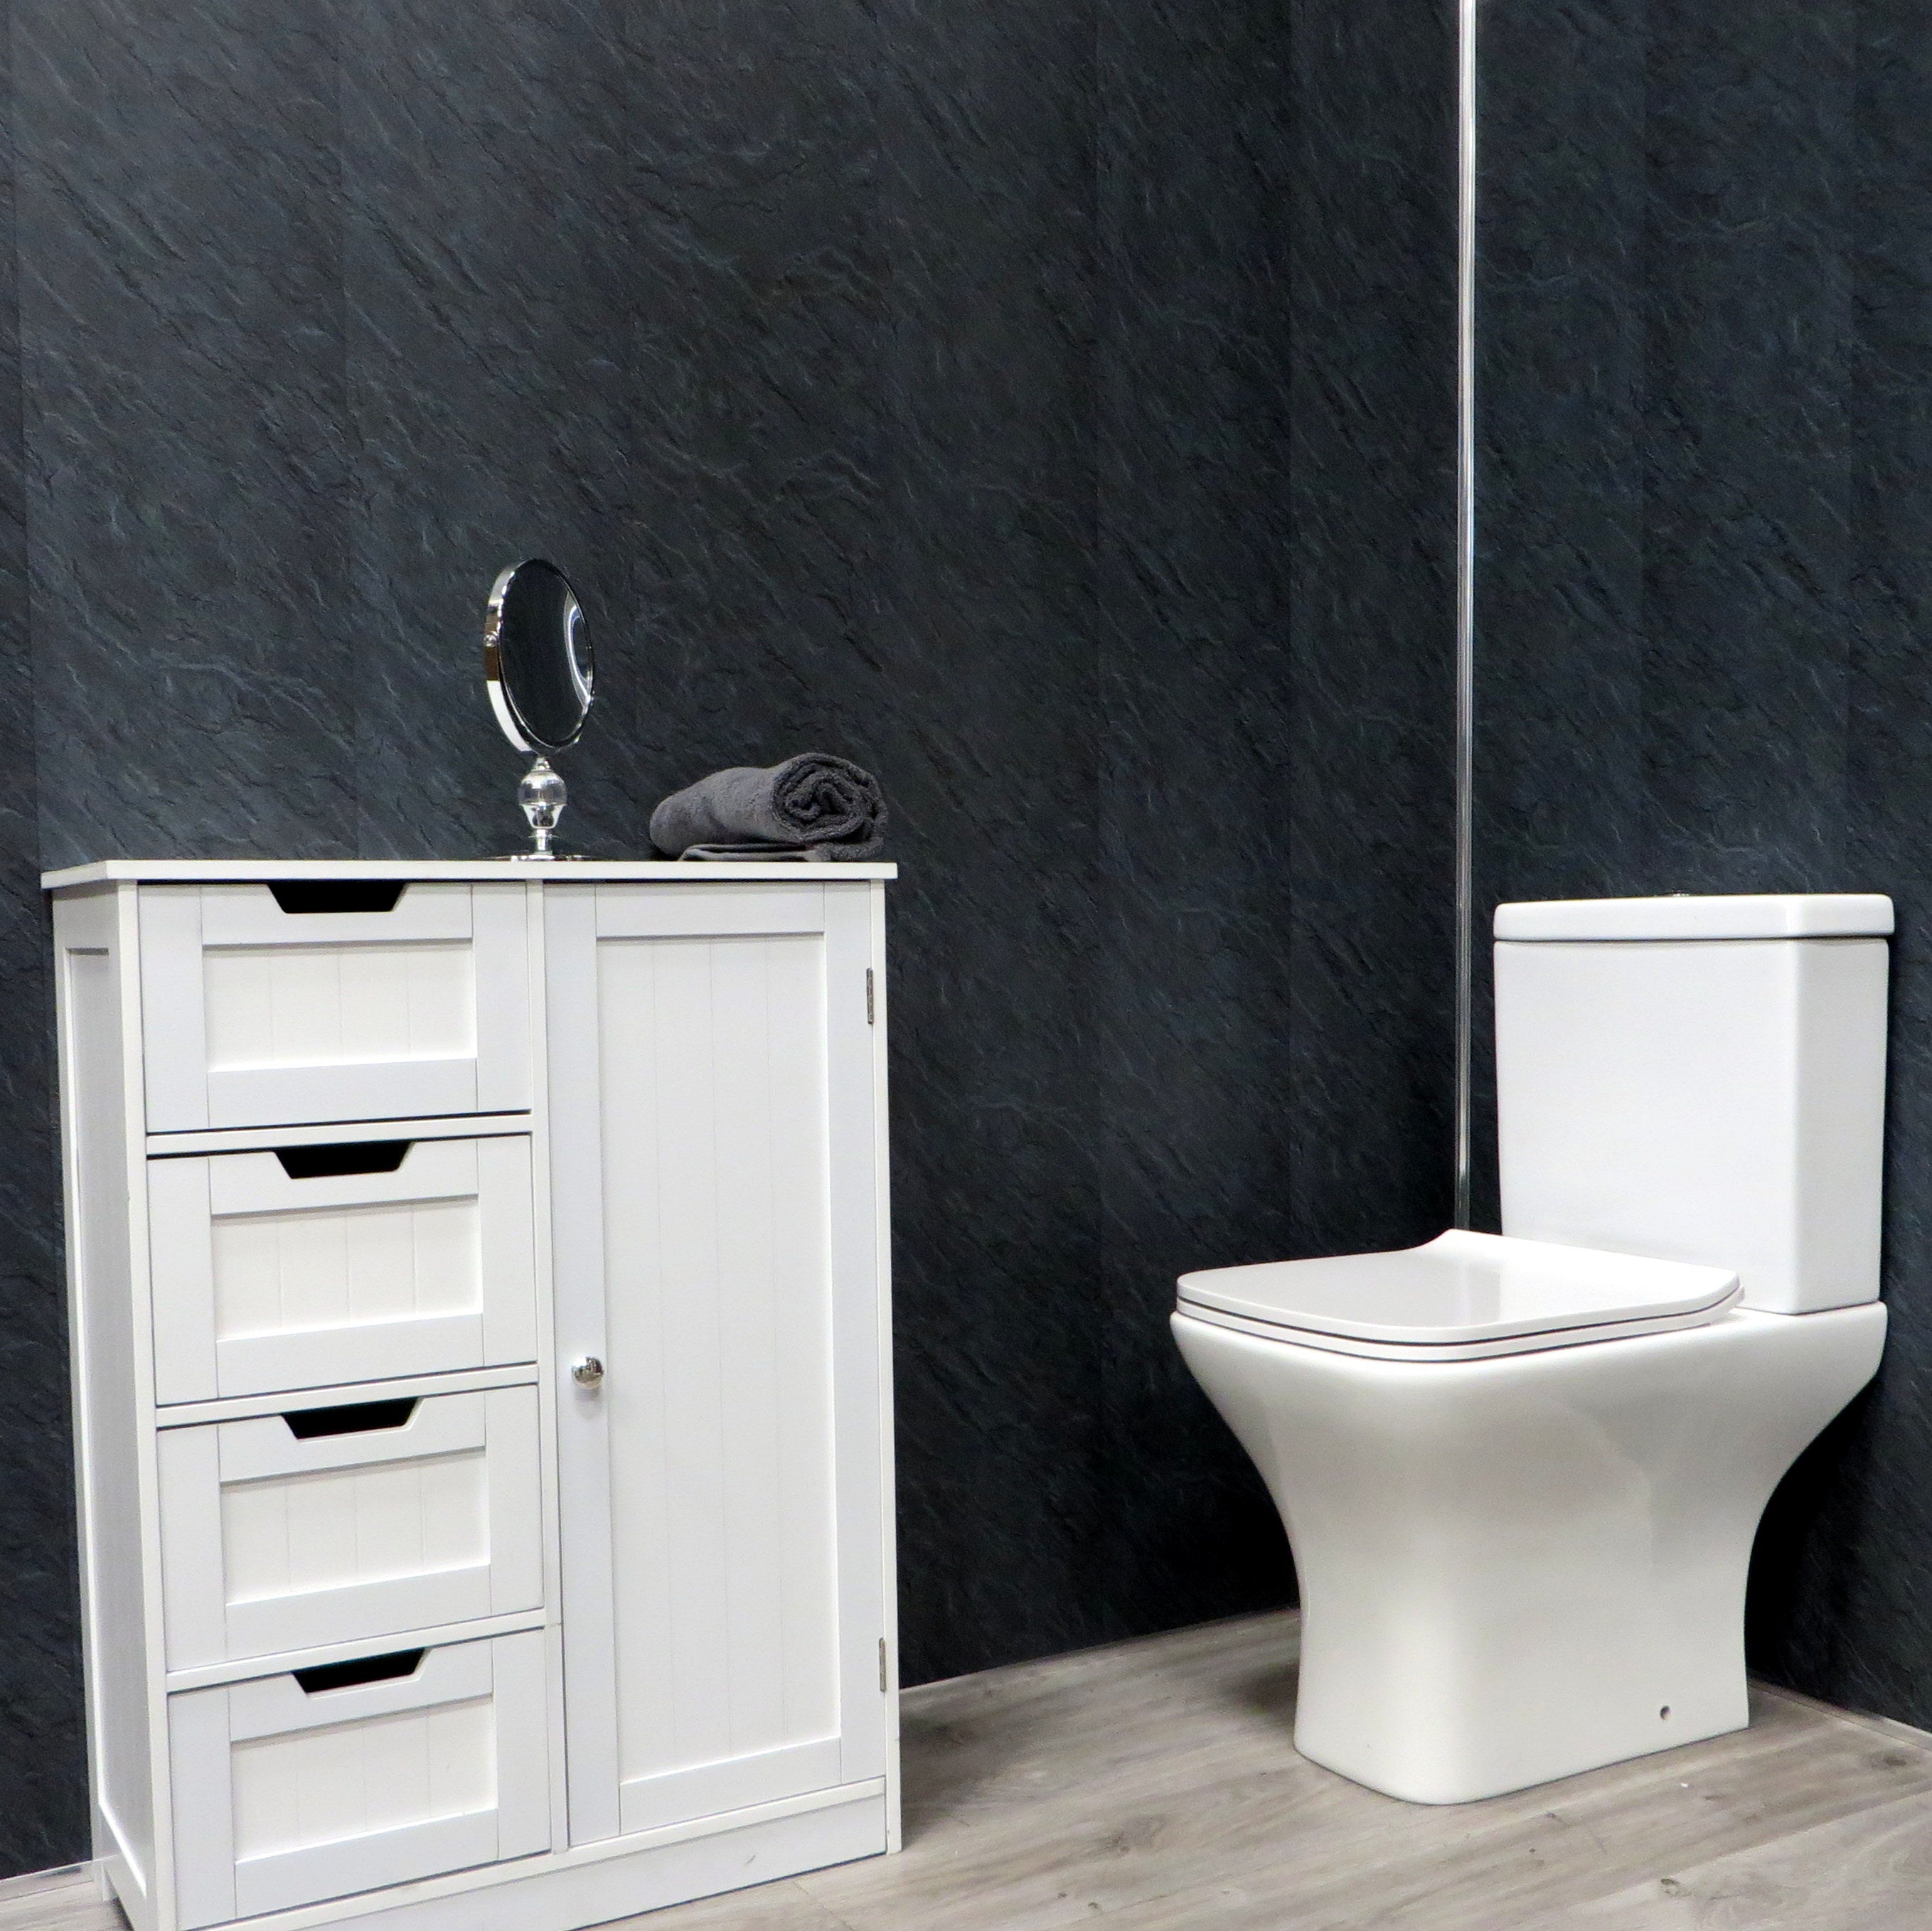 Sample of Hewn Slate 5mm Bathroom Wall Panels PVC Cladding